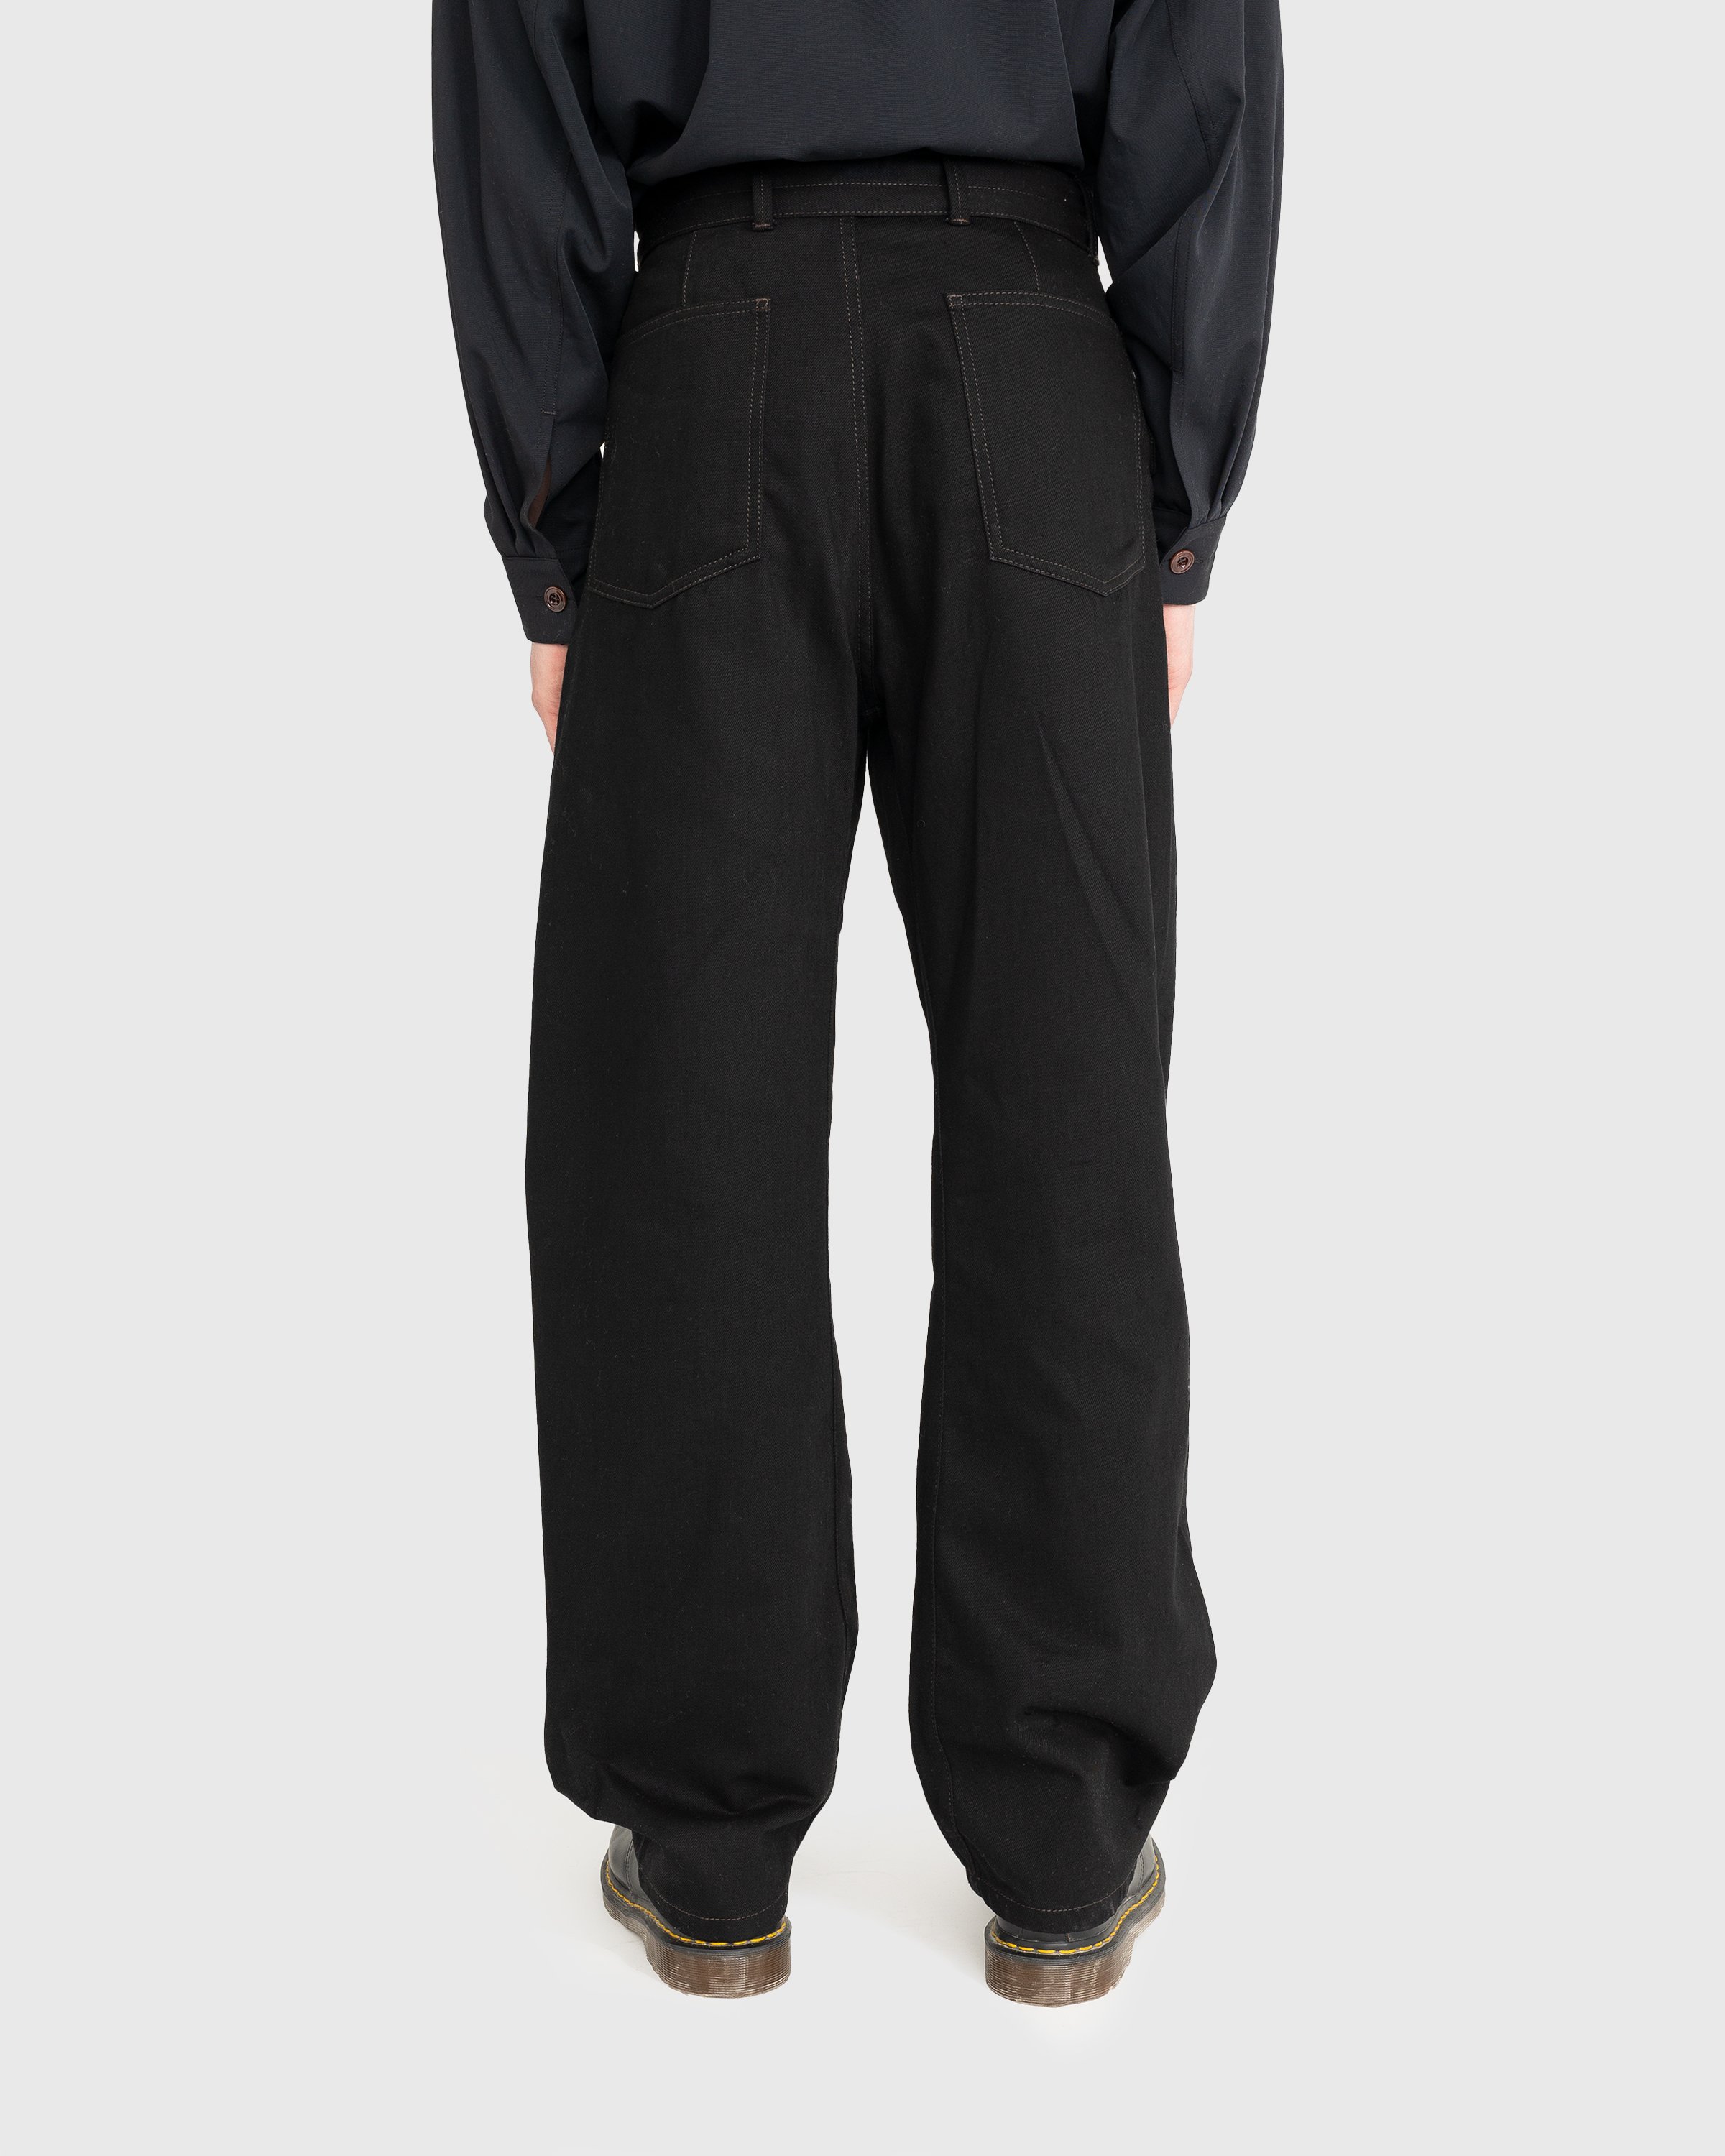 Lemaire - Twisted Belted Pants Black - Clothing - Black - Image 3